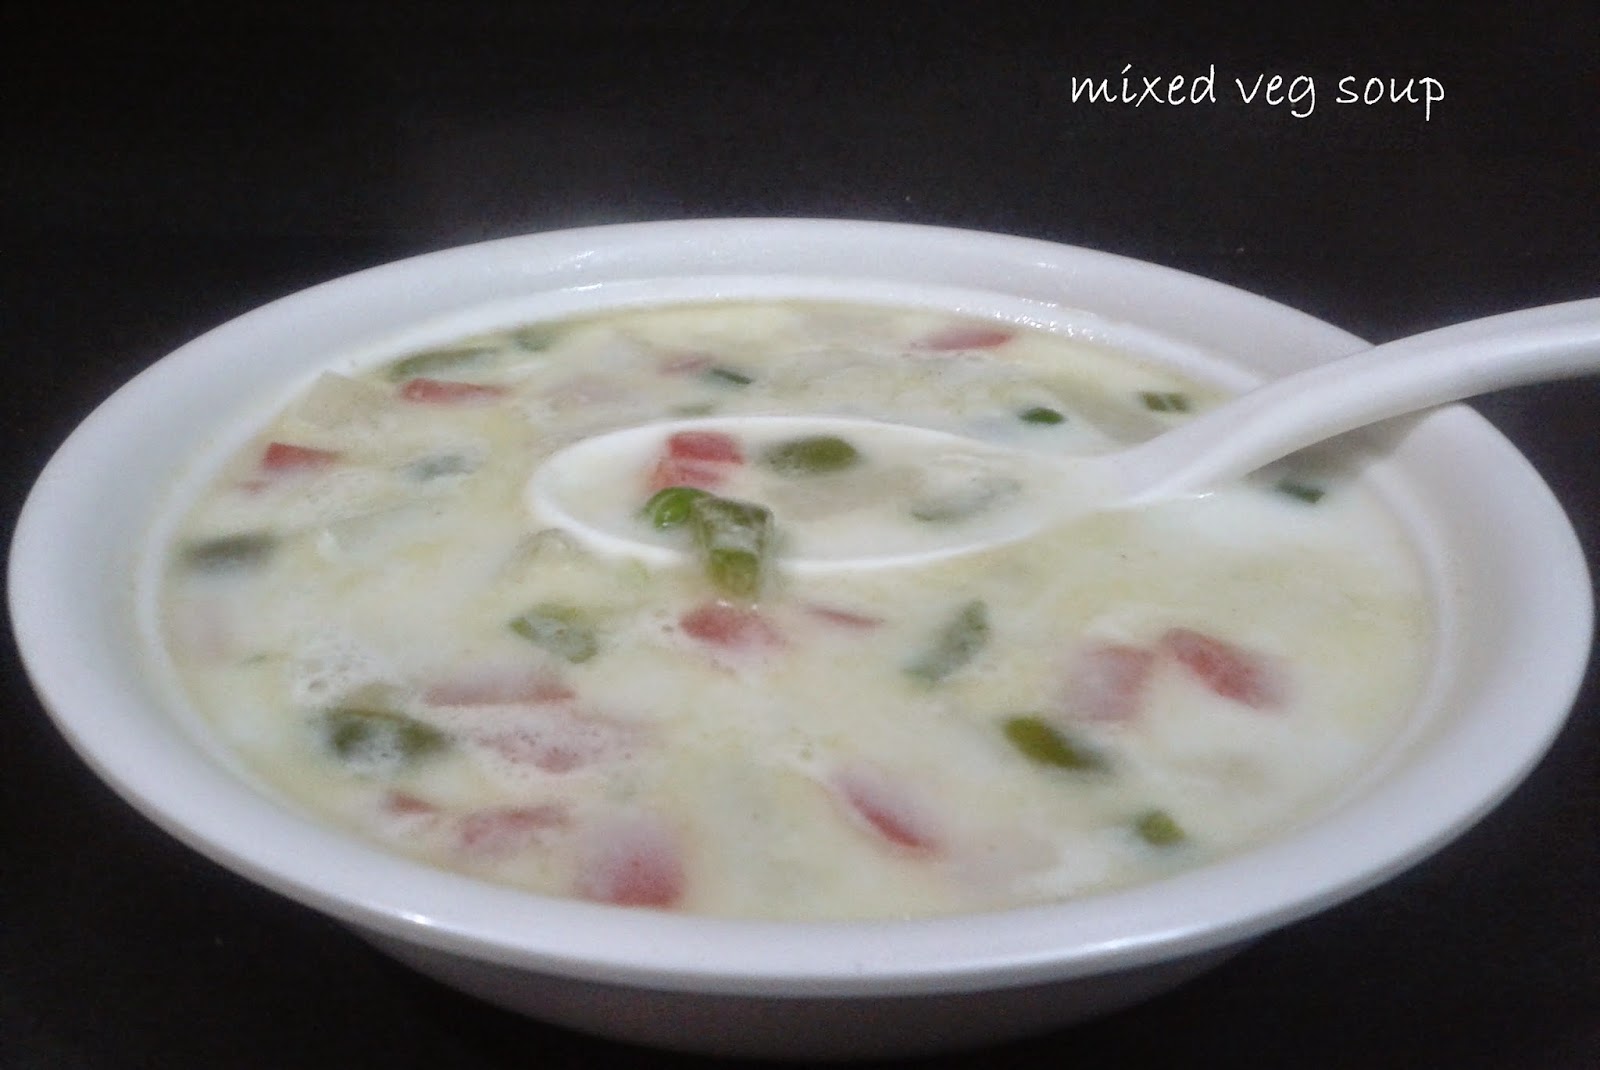 http://www.paakvidhi.com/2015/01/mixed-veg-soup-vegetable-soup.html